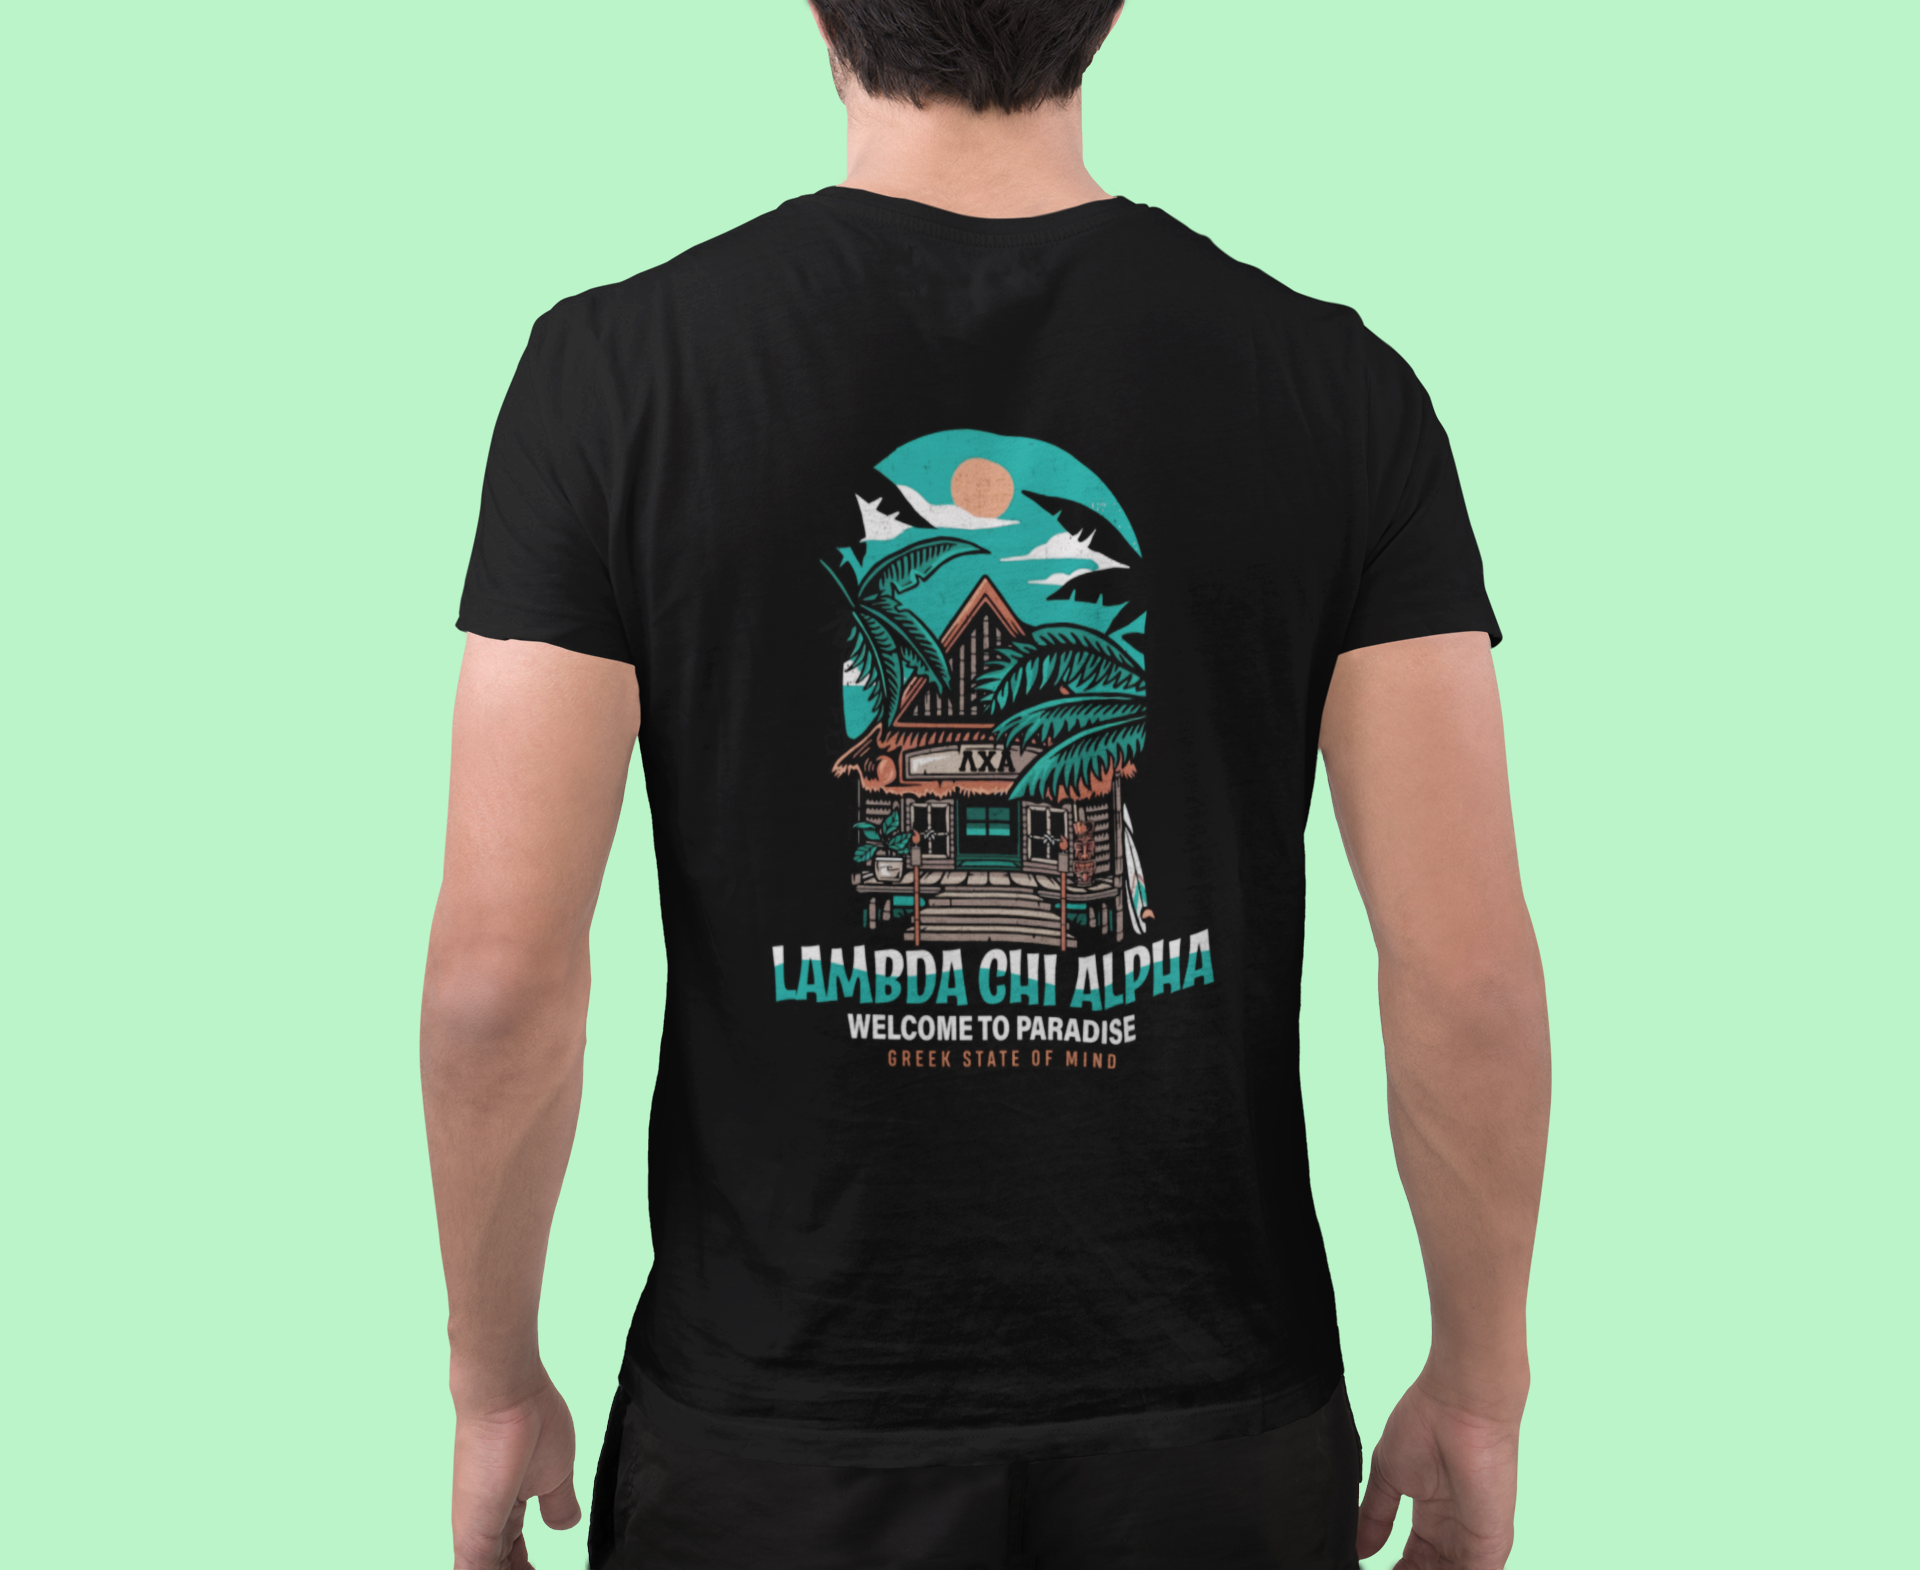 Lambda Chi Alpha Graphic T-Shirt | Welcome to Paradise | Lambda Chi Alpha Fraternity Shirt model 